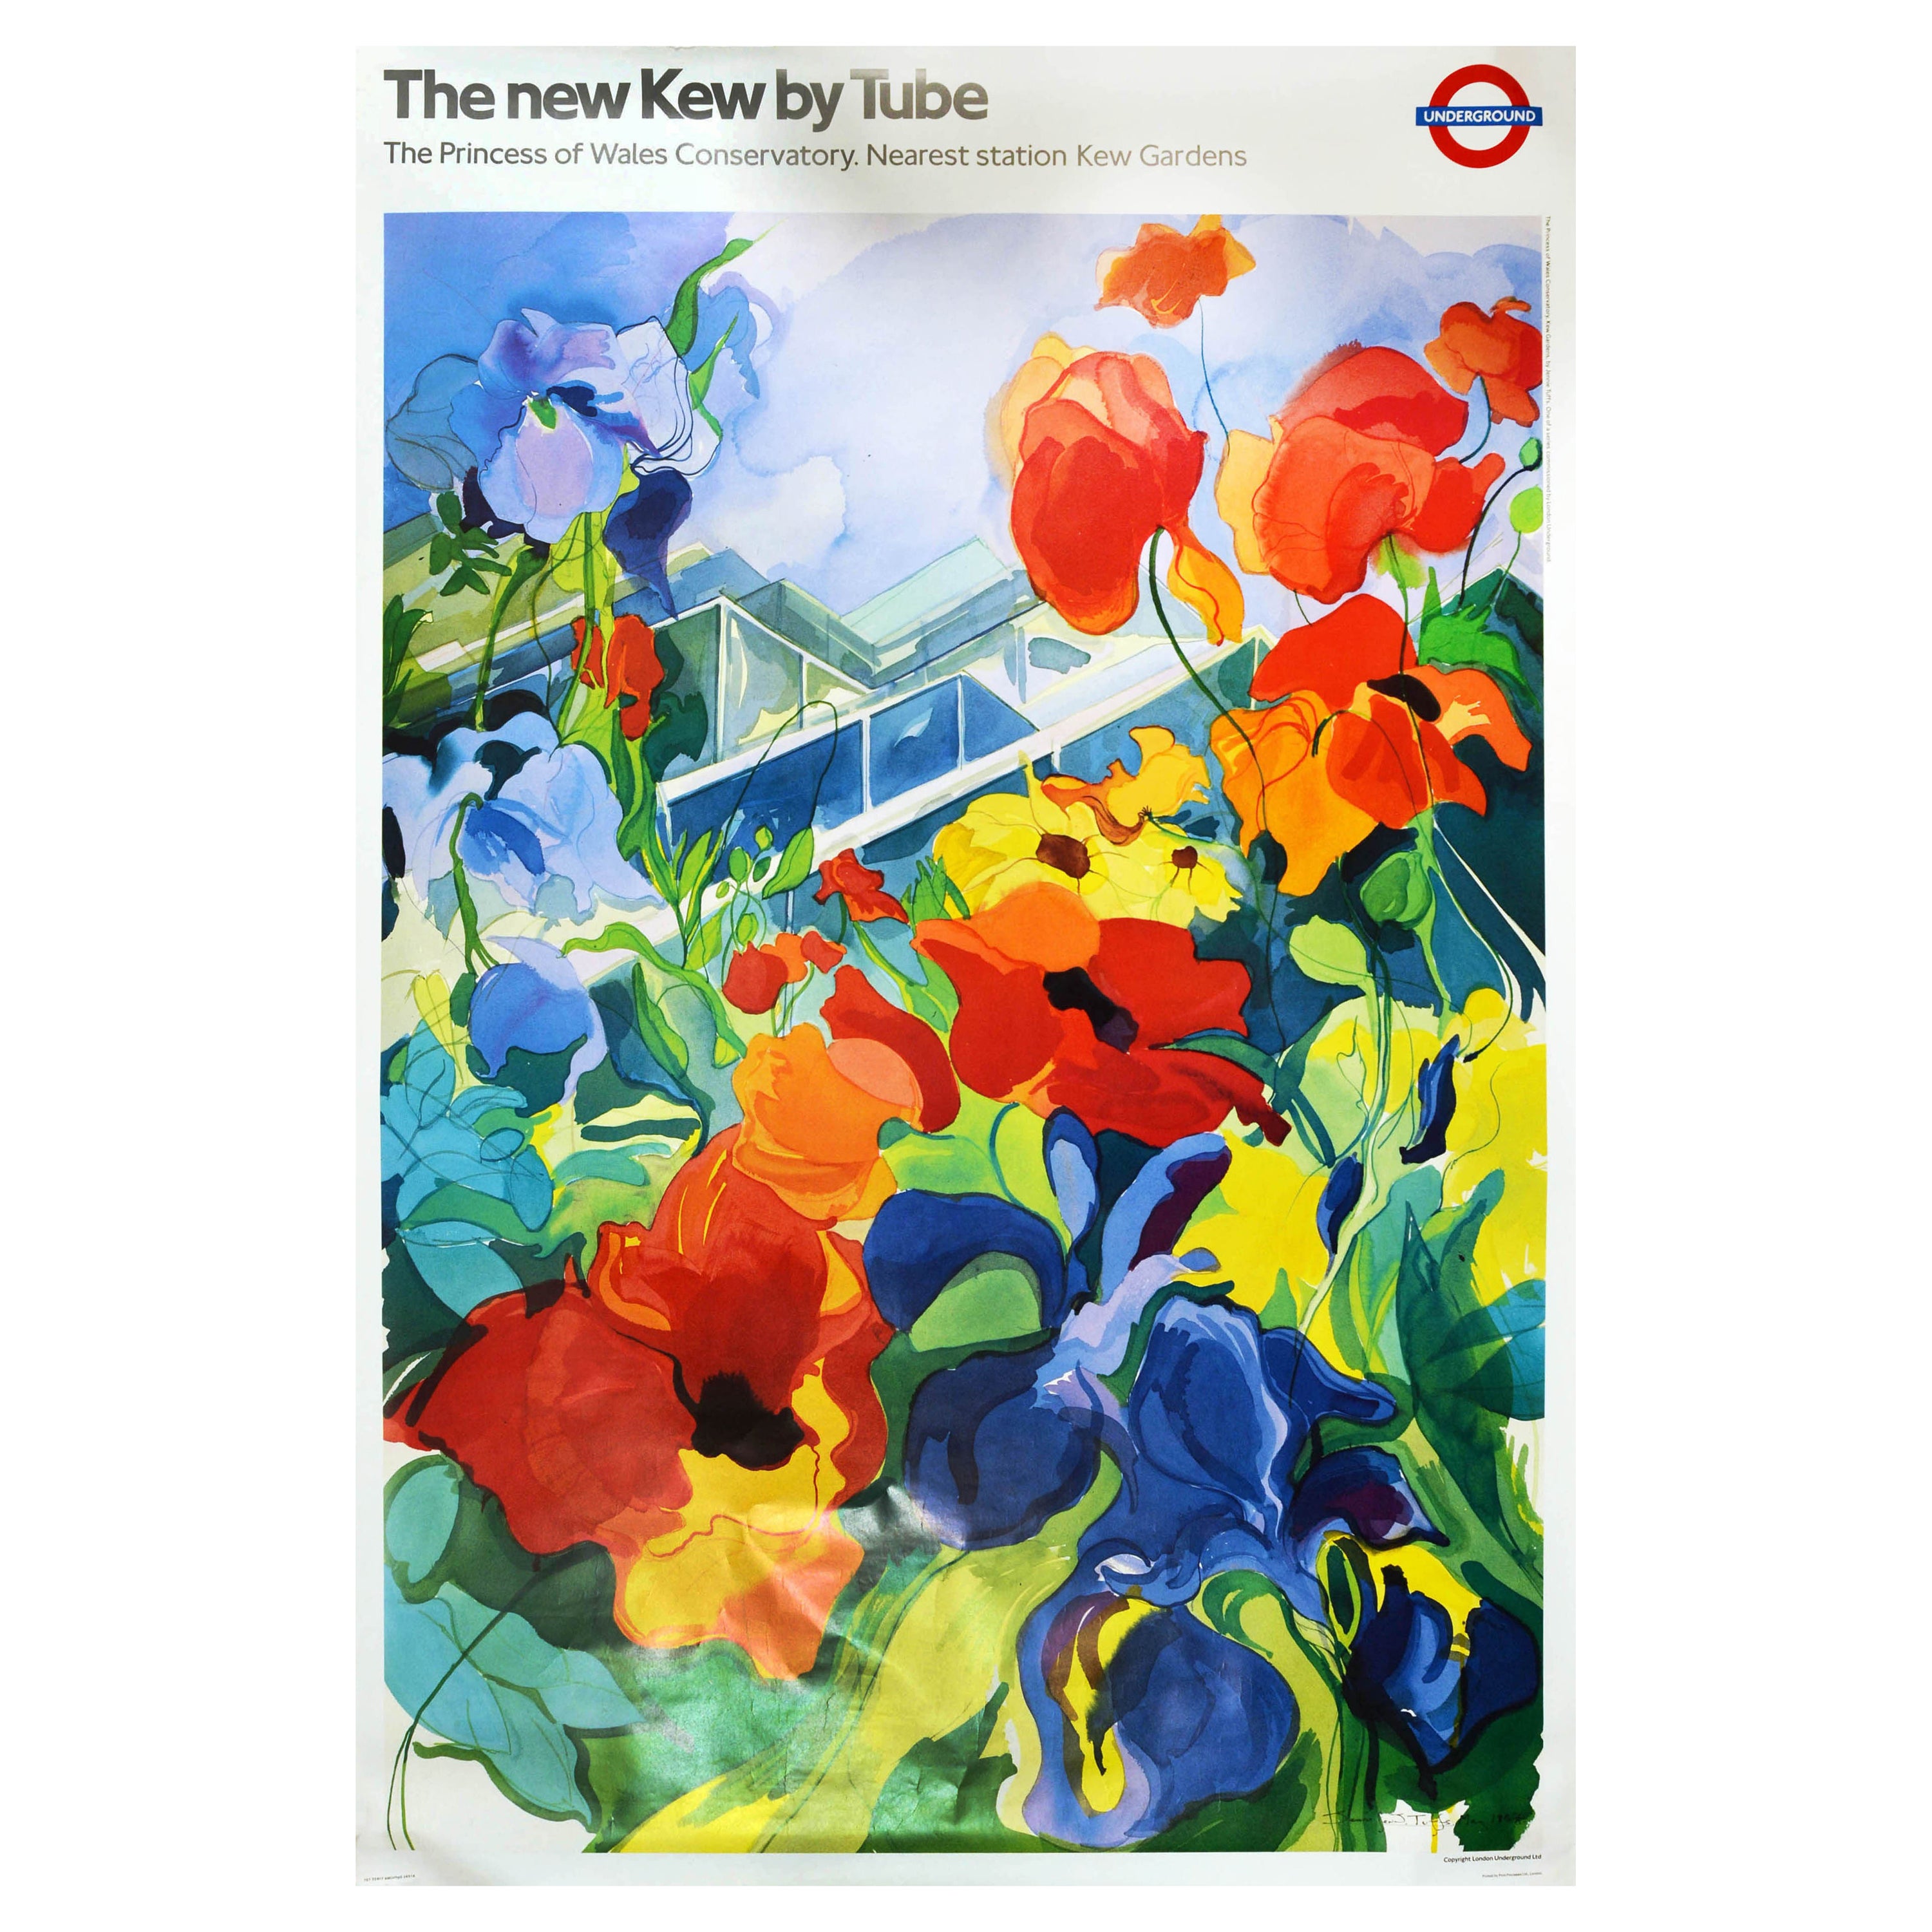 Original Vintage Travel Poster London Underground New Kew By Tube Iris Flower For Sale